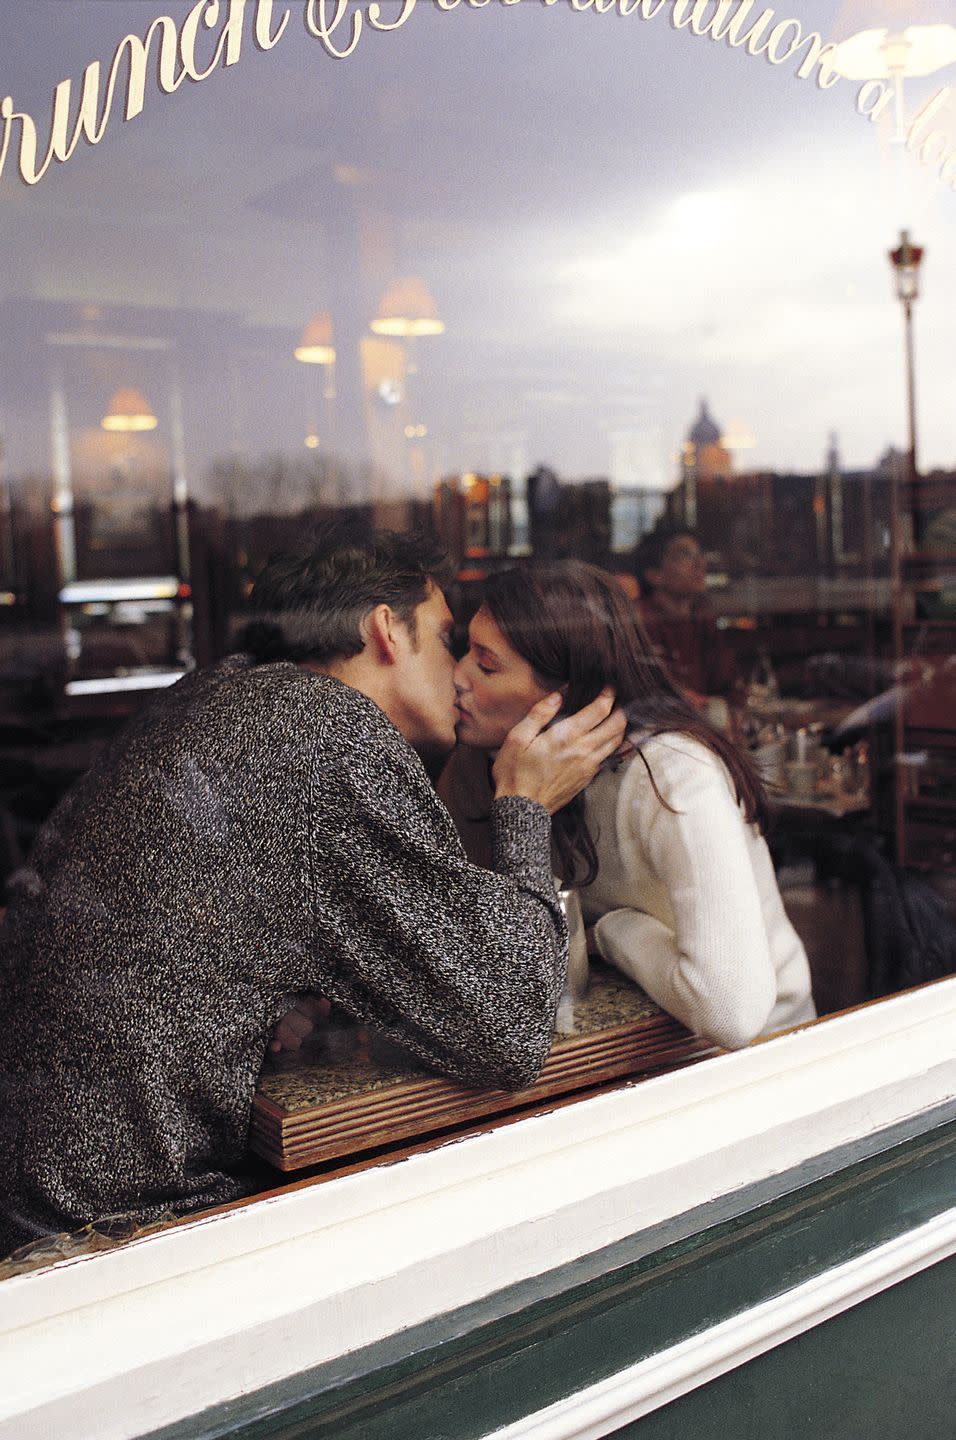 couple kissing in restaurant window